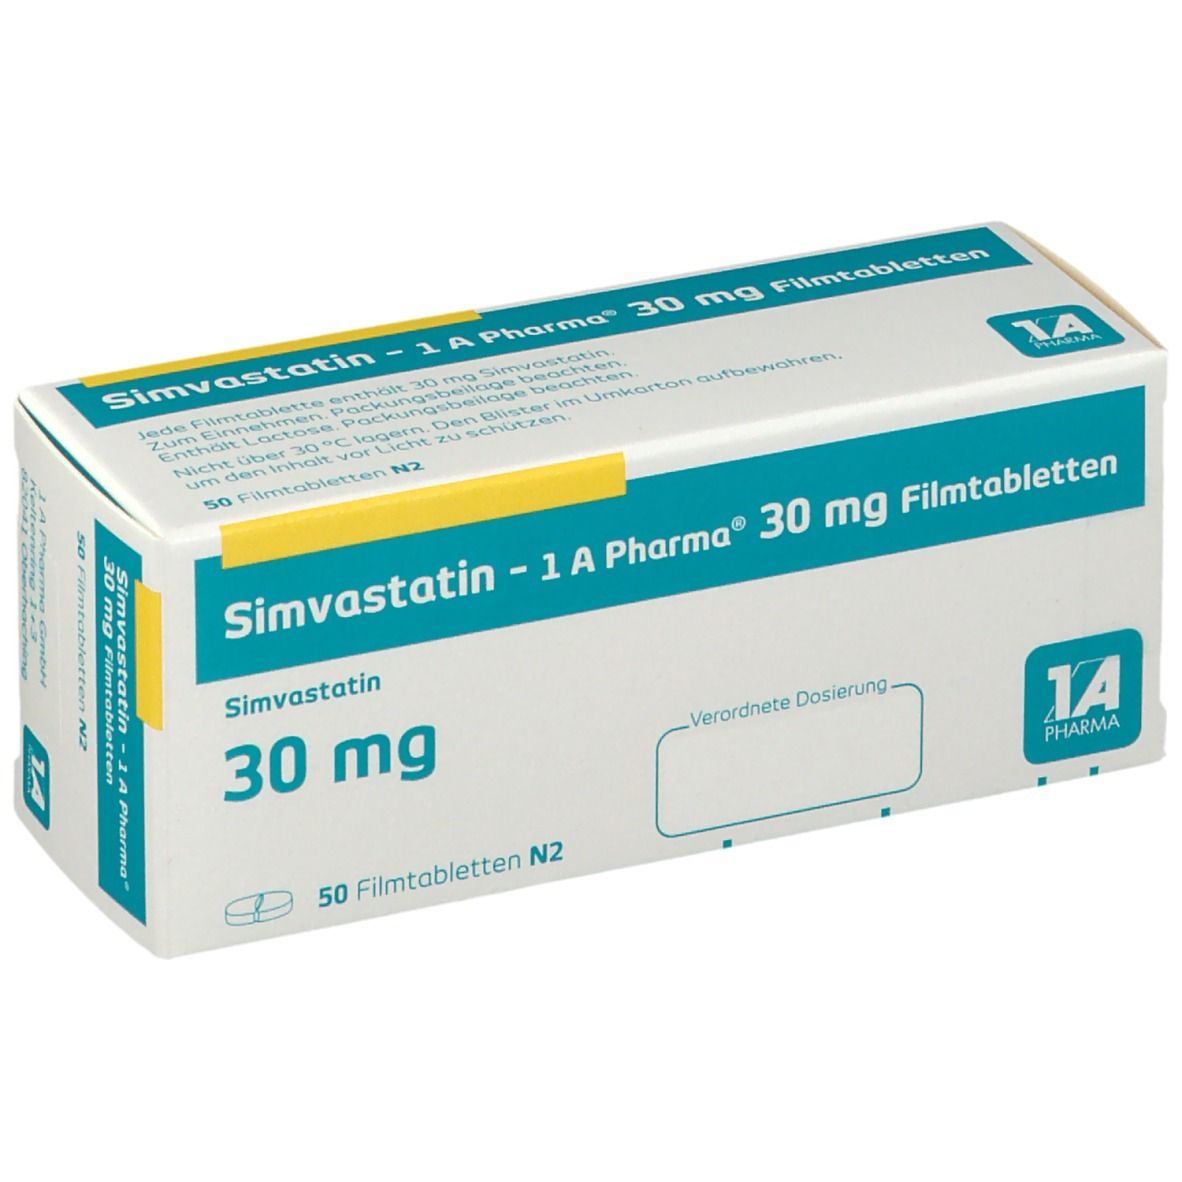 Simvastatin - 1 A Pharma® 30 mg